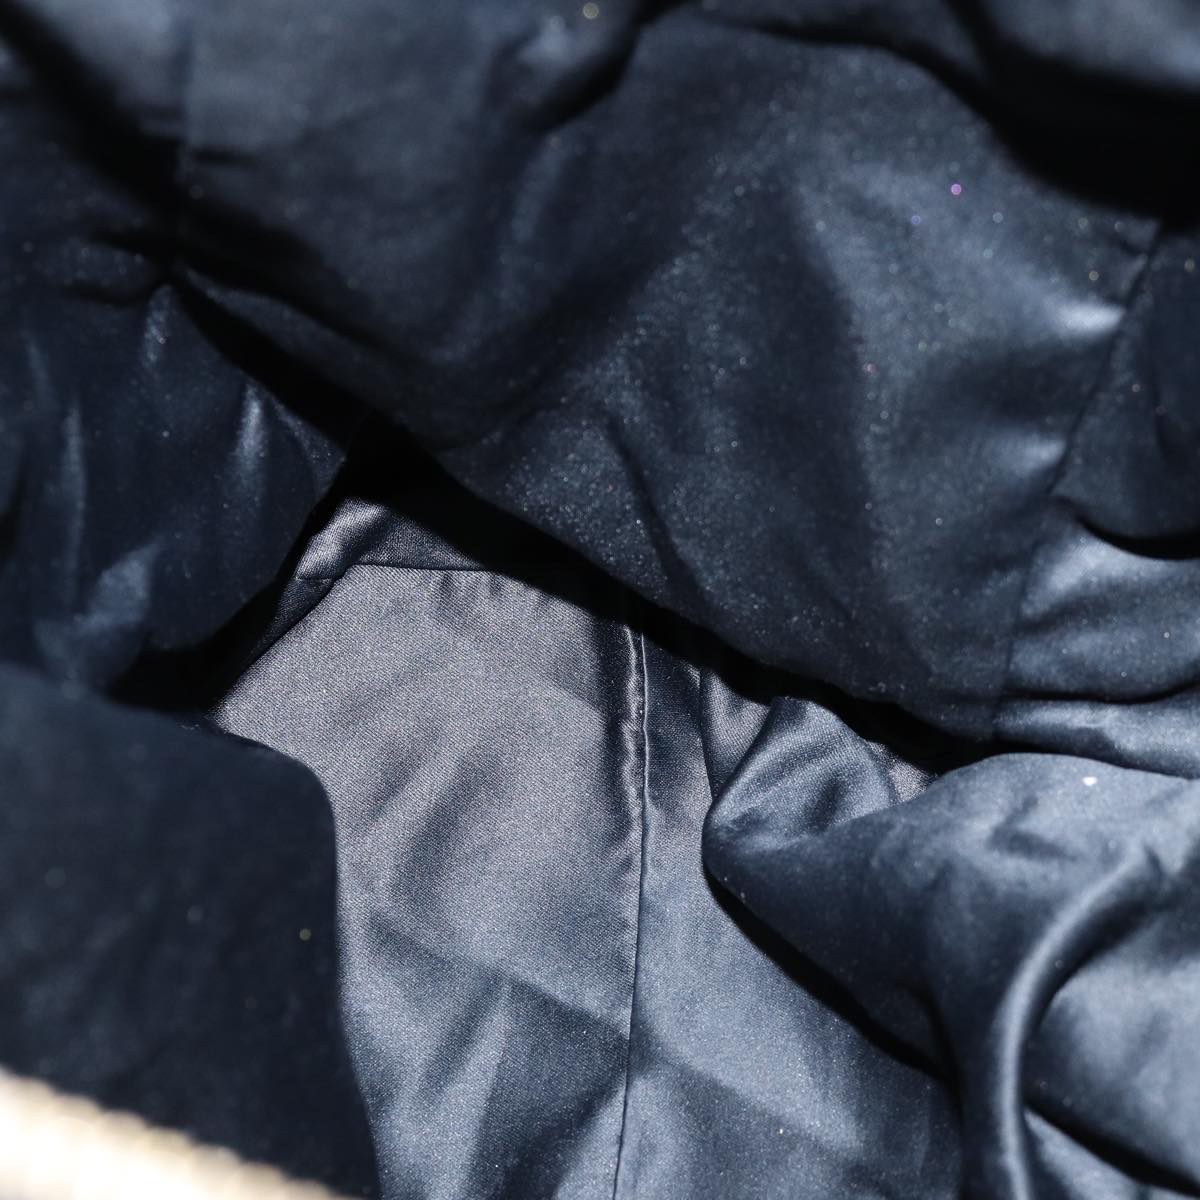 Miu Miu Hand Bag Leather Black Auth bs13519